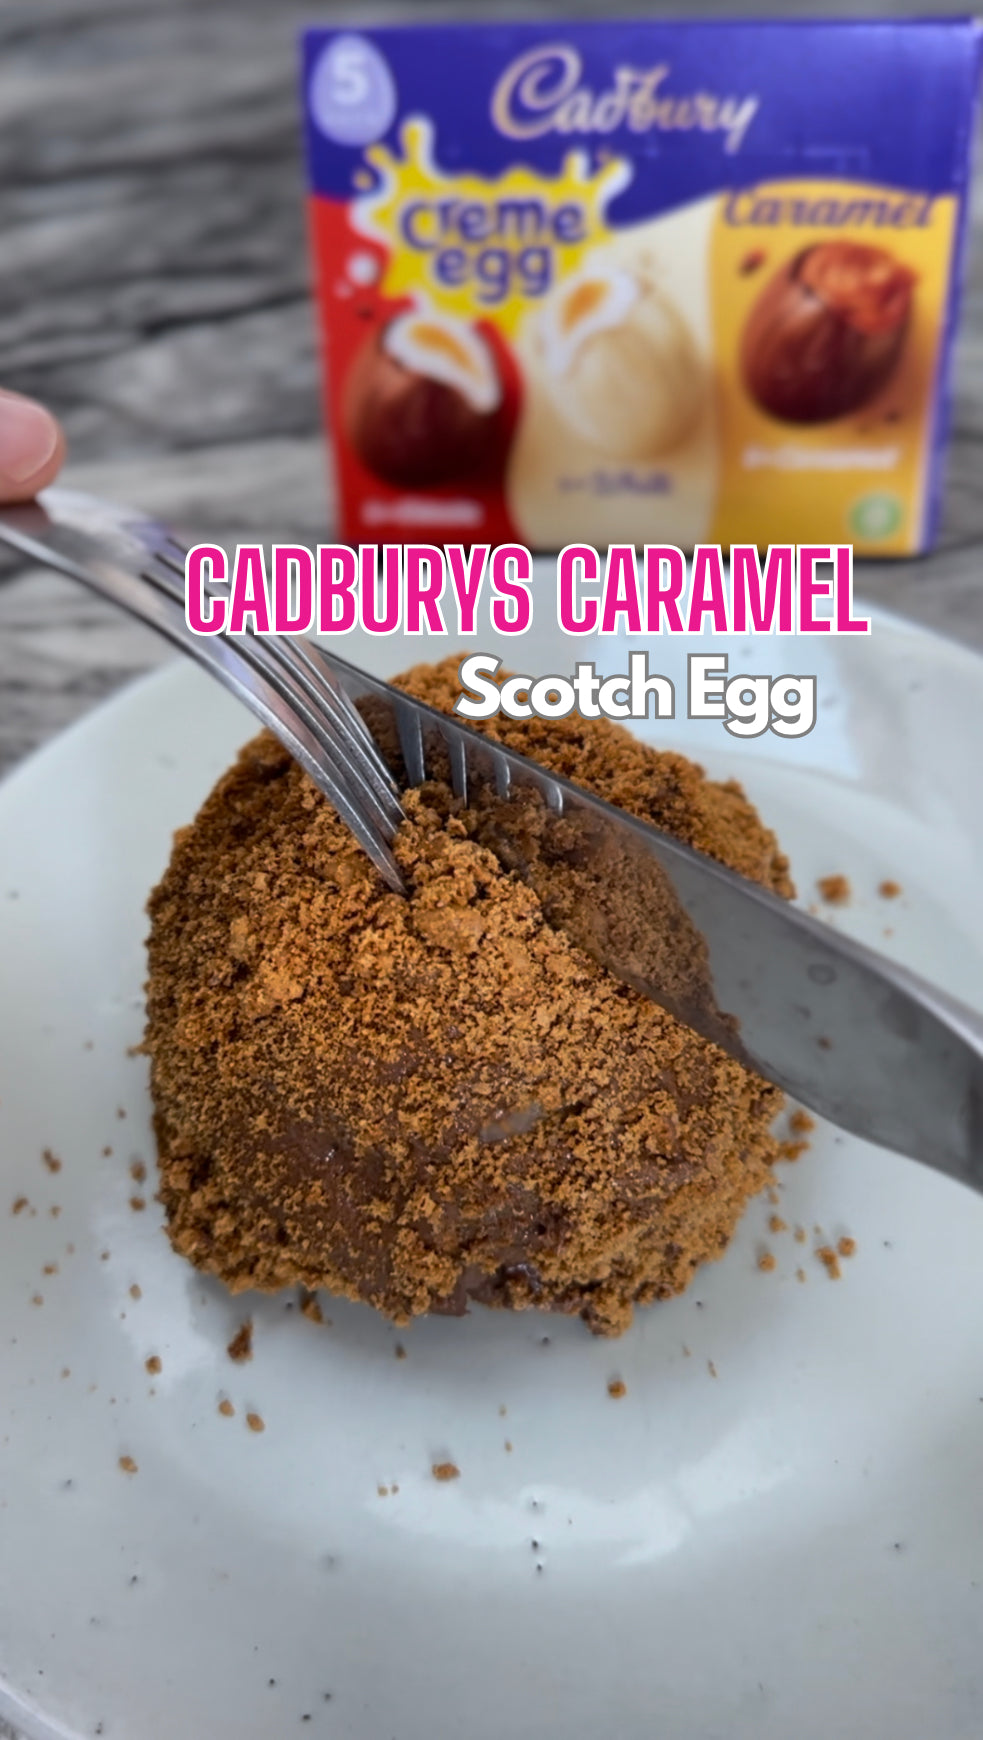 Cadburys Caramel Scotch Egg x2